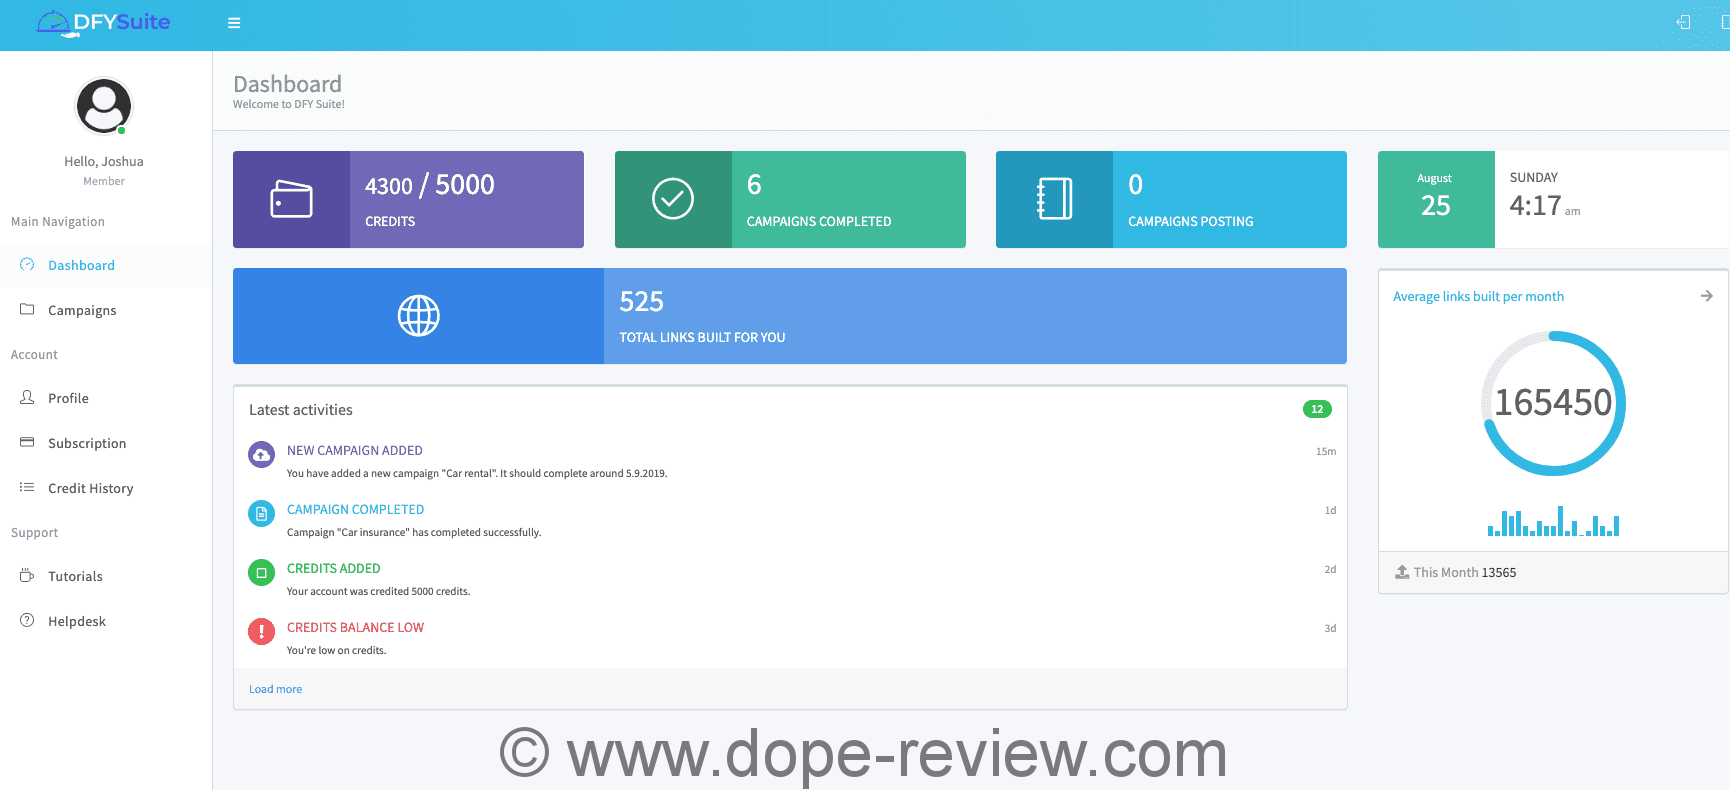 DFY Suite 2.0 Review